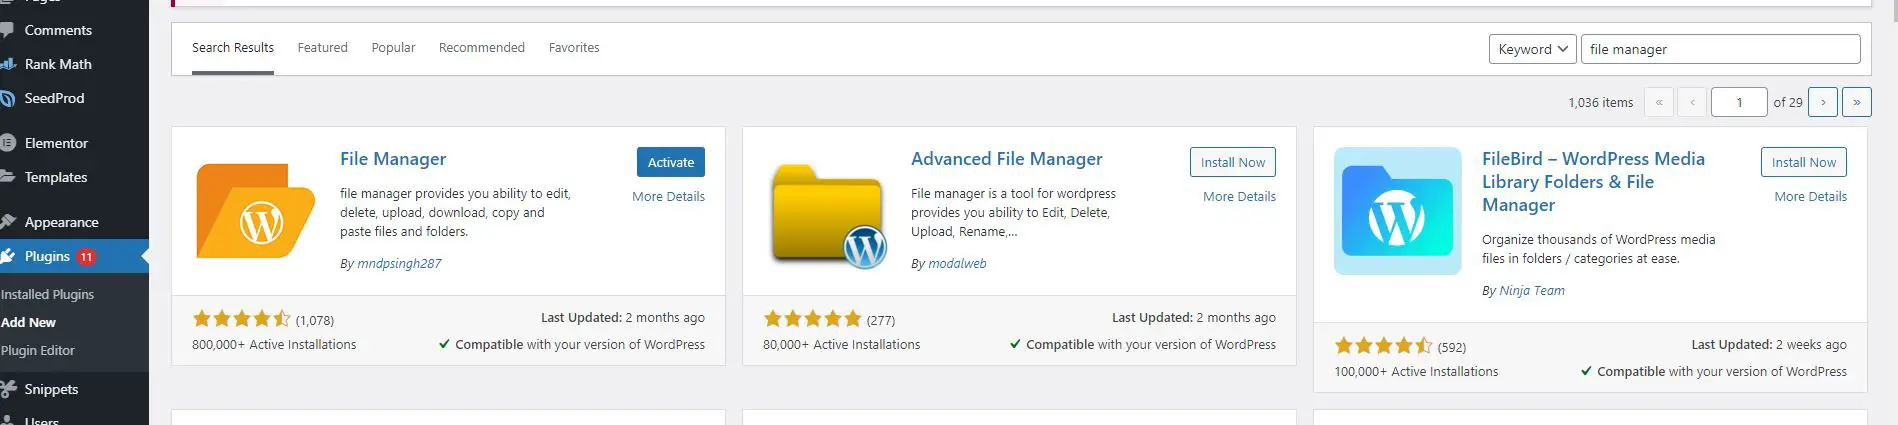 Search "File Manager" in WordPress plugin search